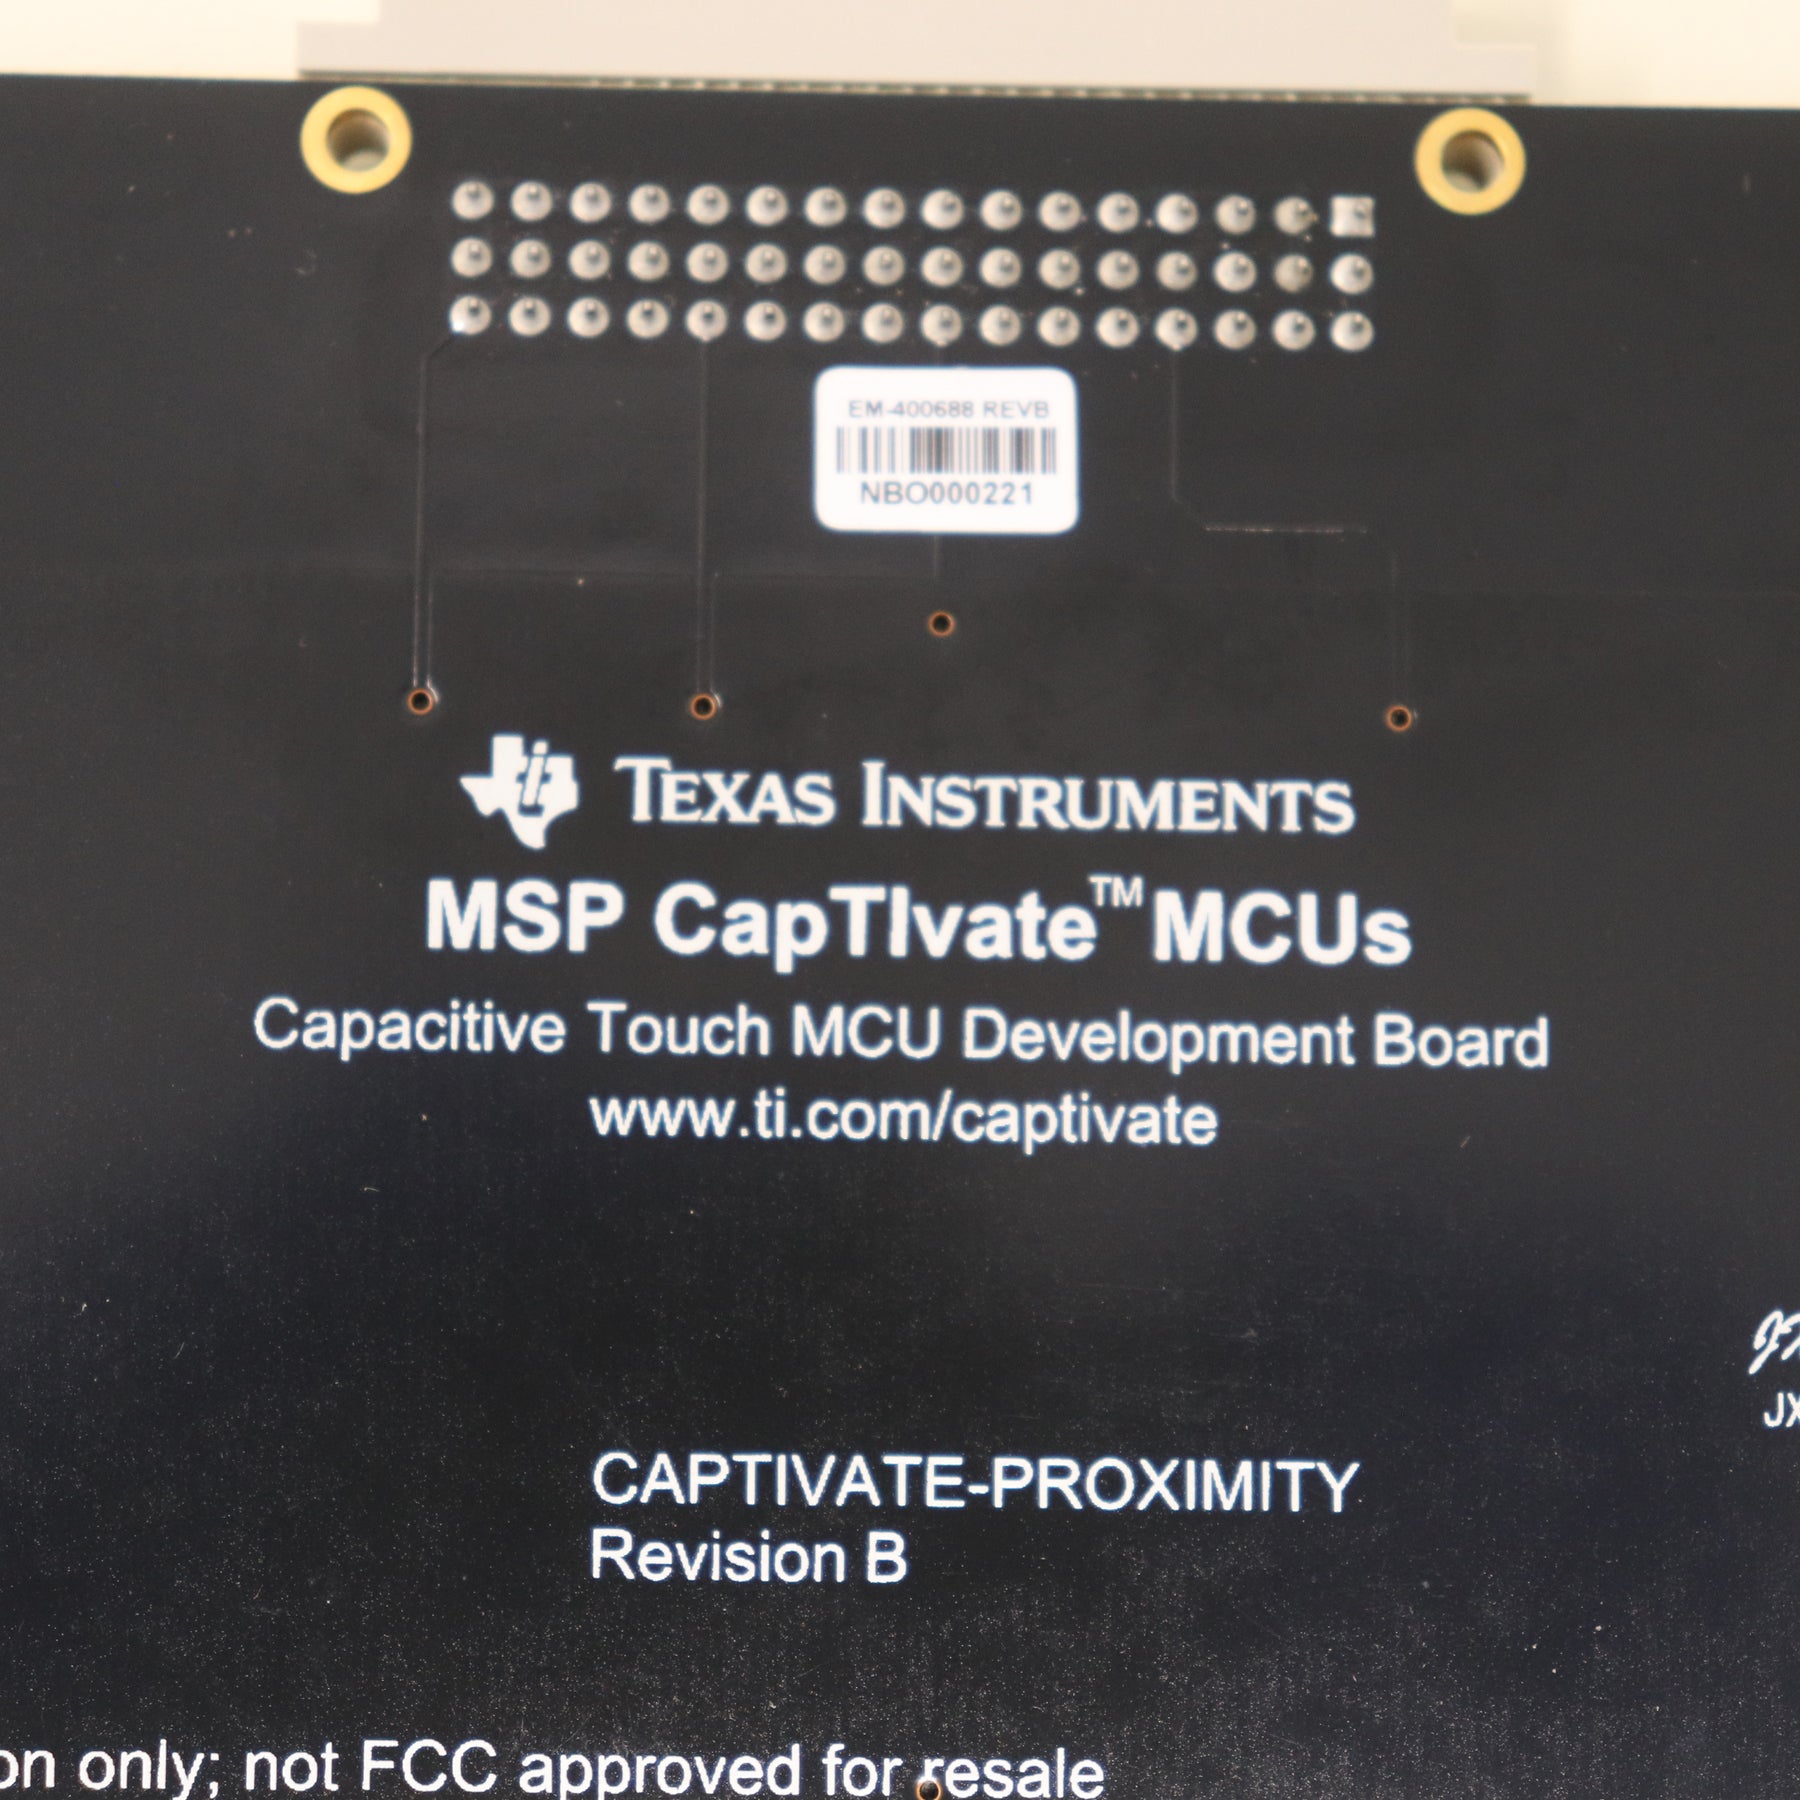 Texas Instruments TI MSP CapTIvate MCUs CAPTIVATE-PROXIMITY Rev B Capacitive Touch Development Board